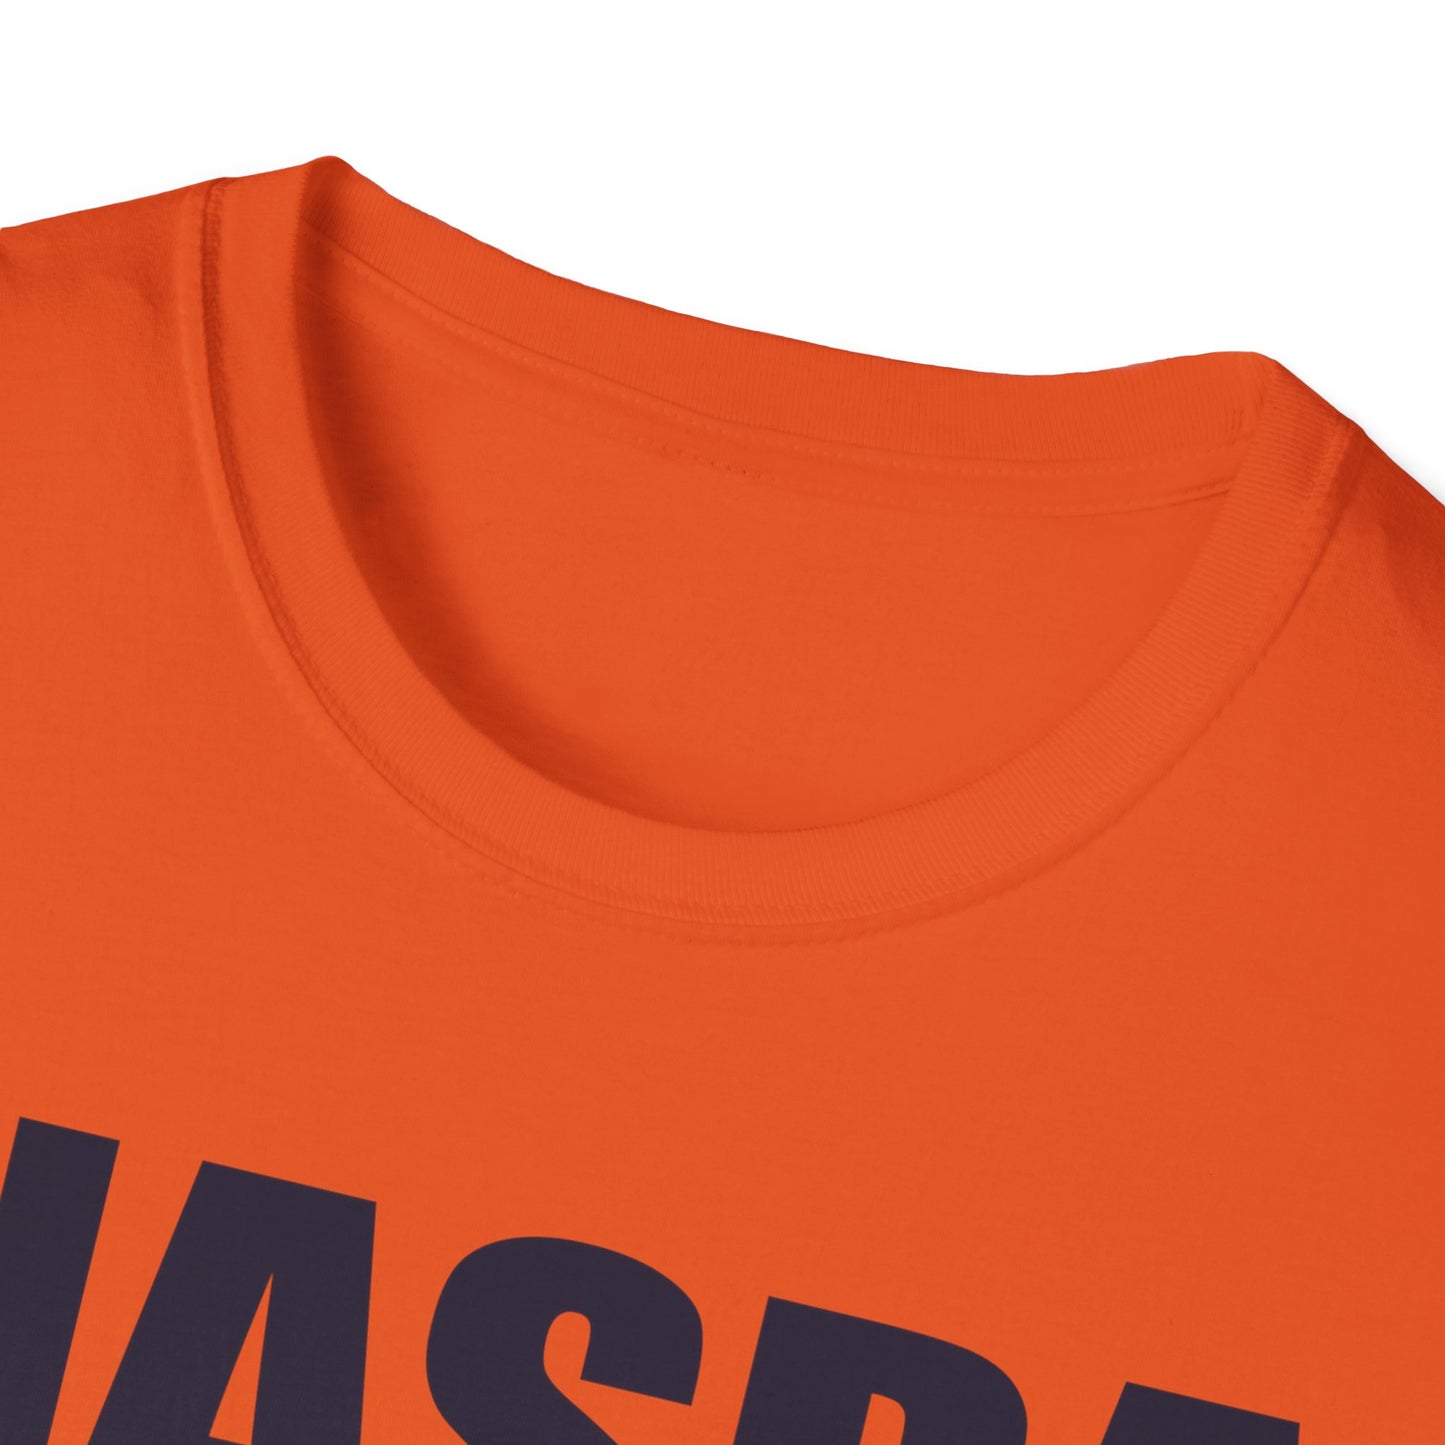 TEAM  Alaskan Malamute - NASDA  Unisex Softstyle T-Shirt